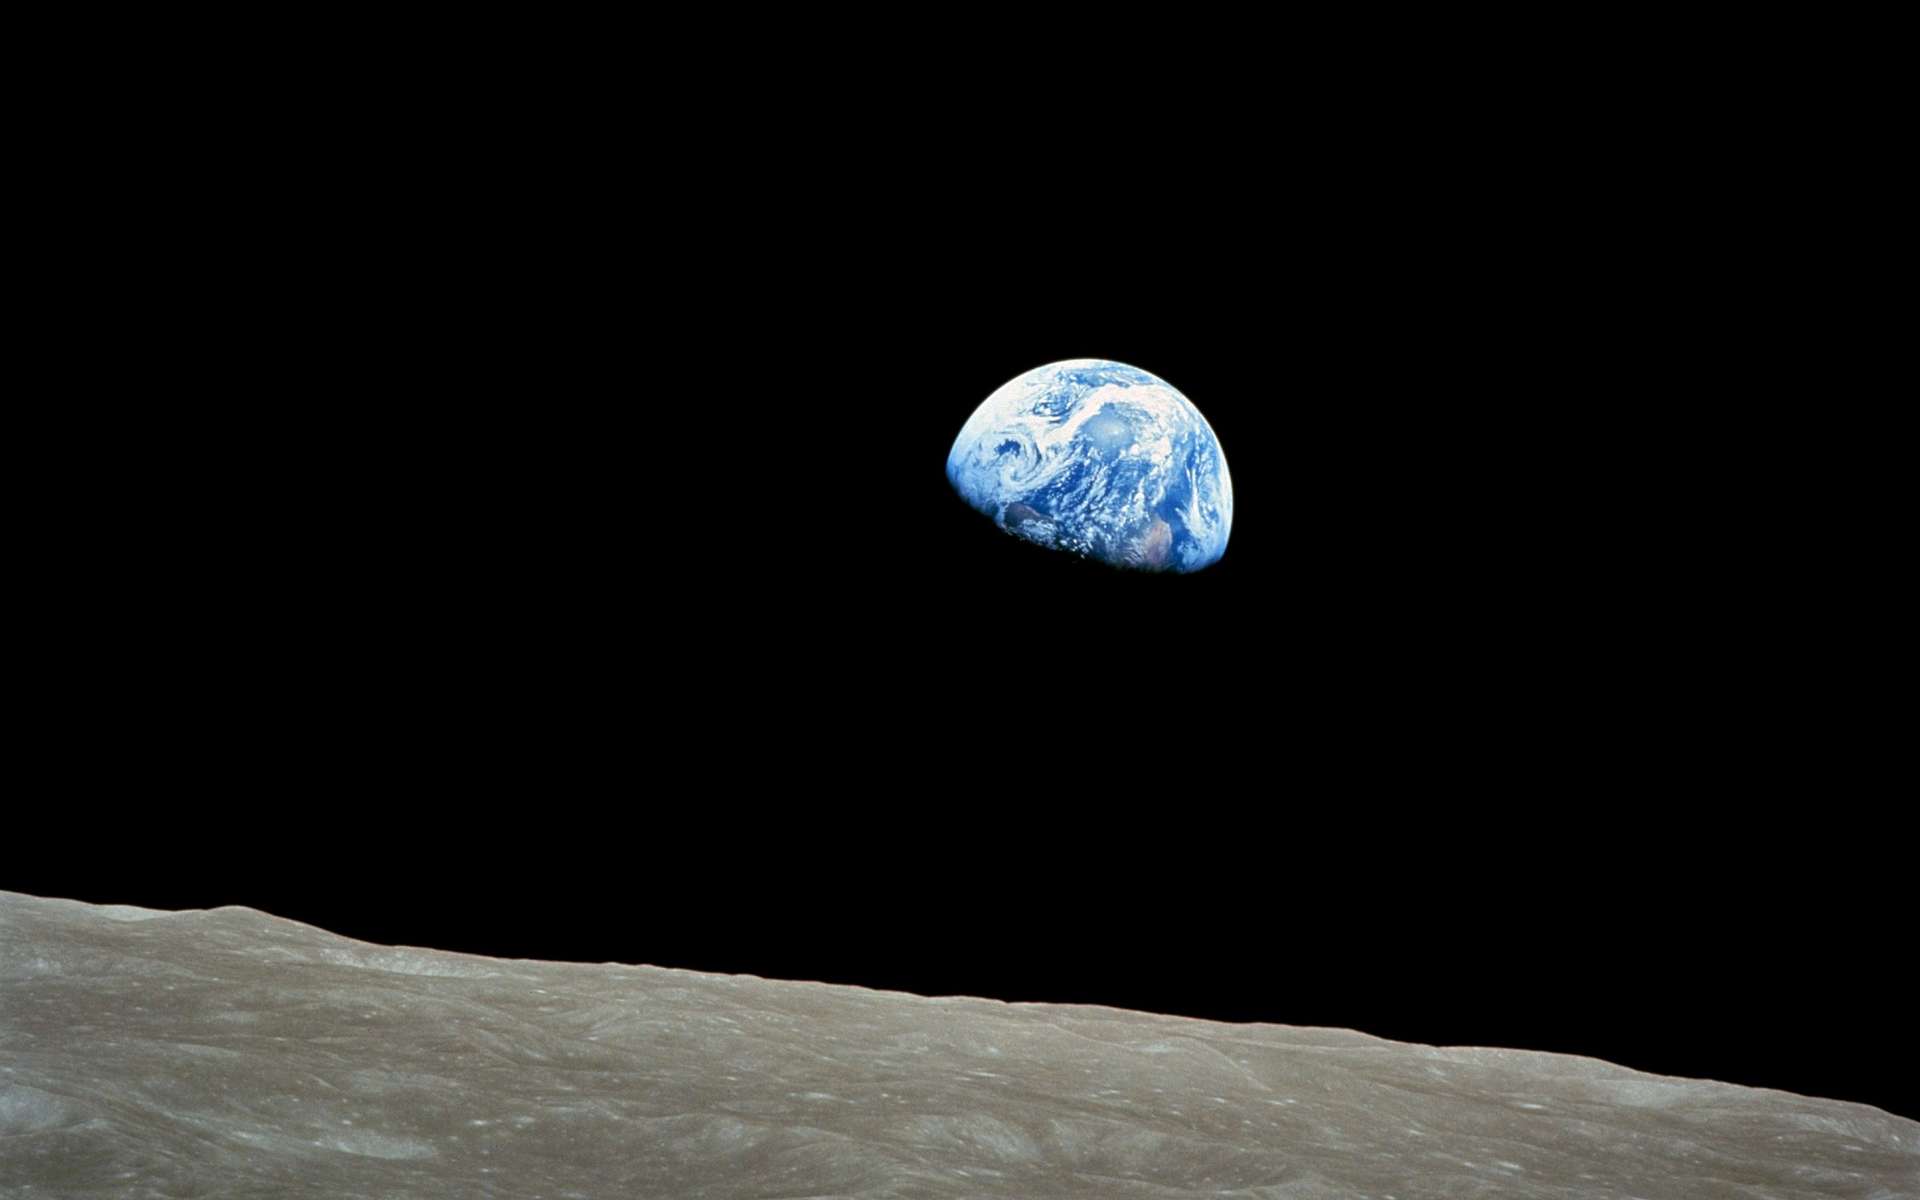 La Terre vue de la Lune par les astronautes d'Apollo 8. © Nasa